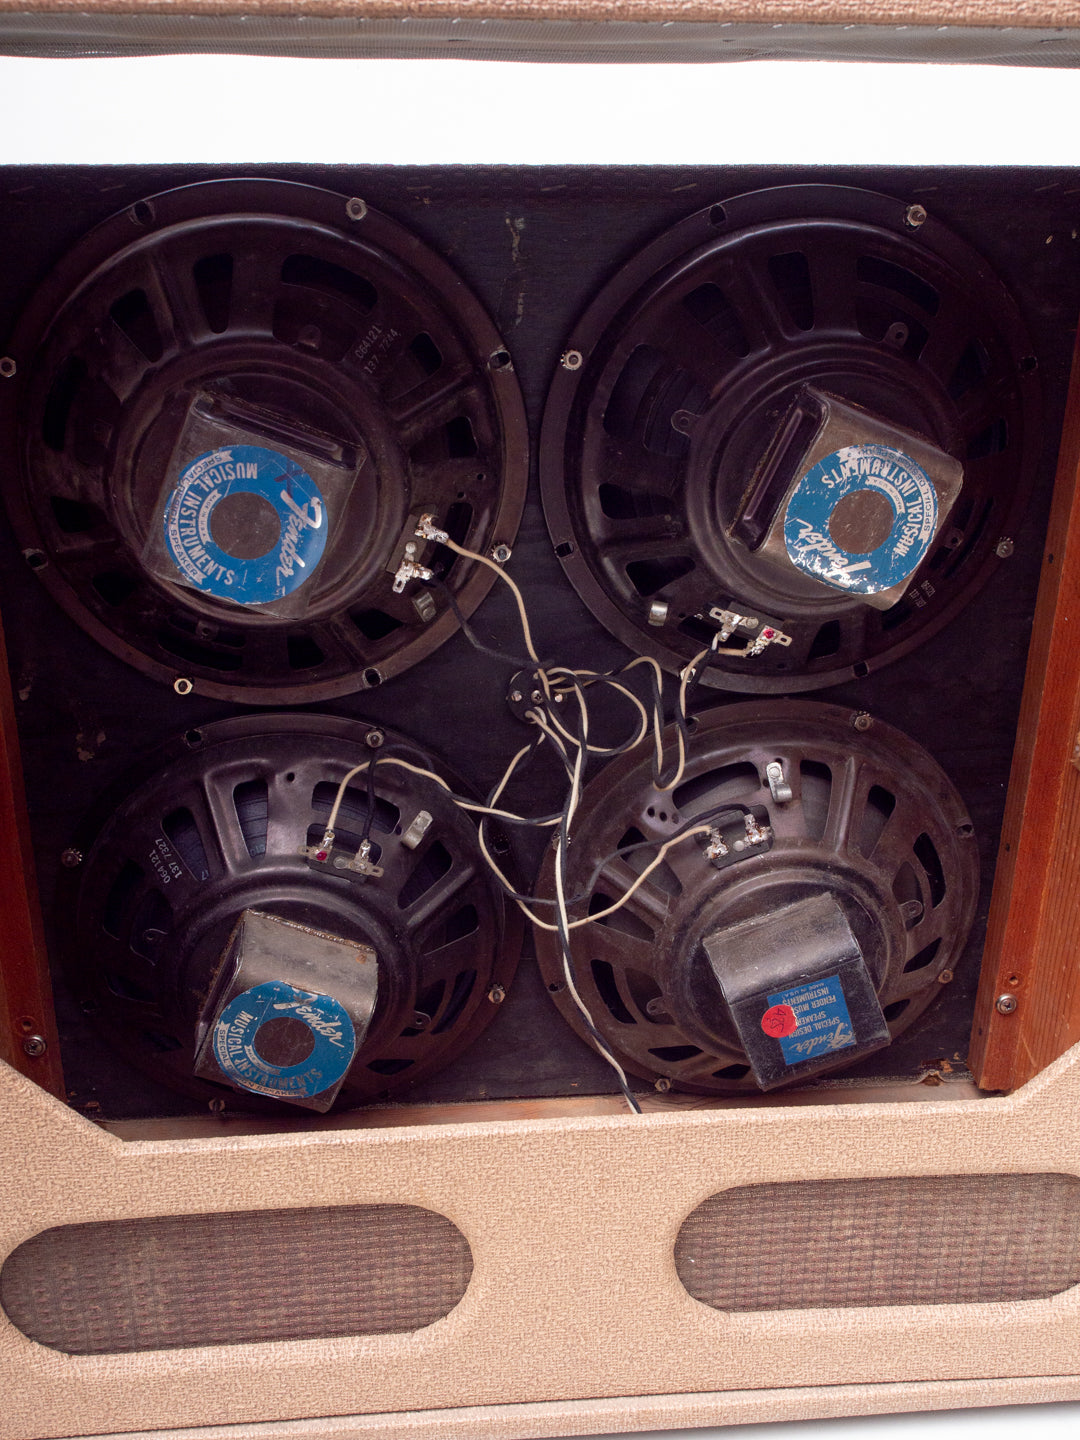 1961 Fender Concert Brownface Amplifier